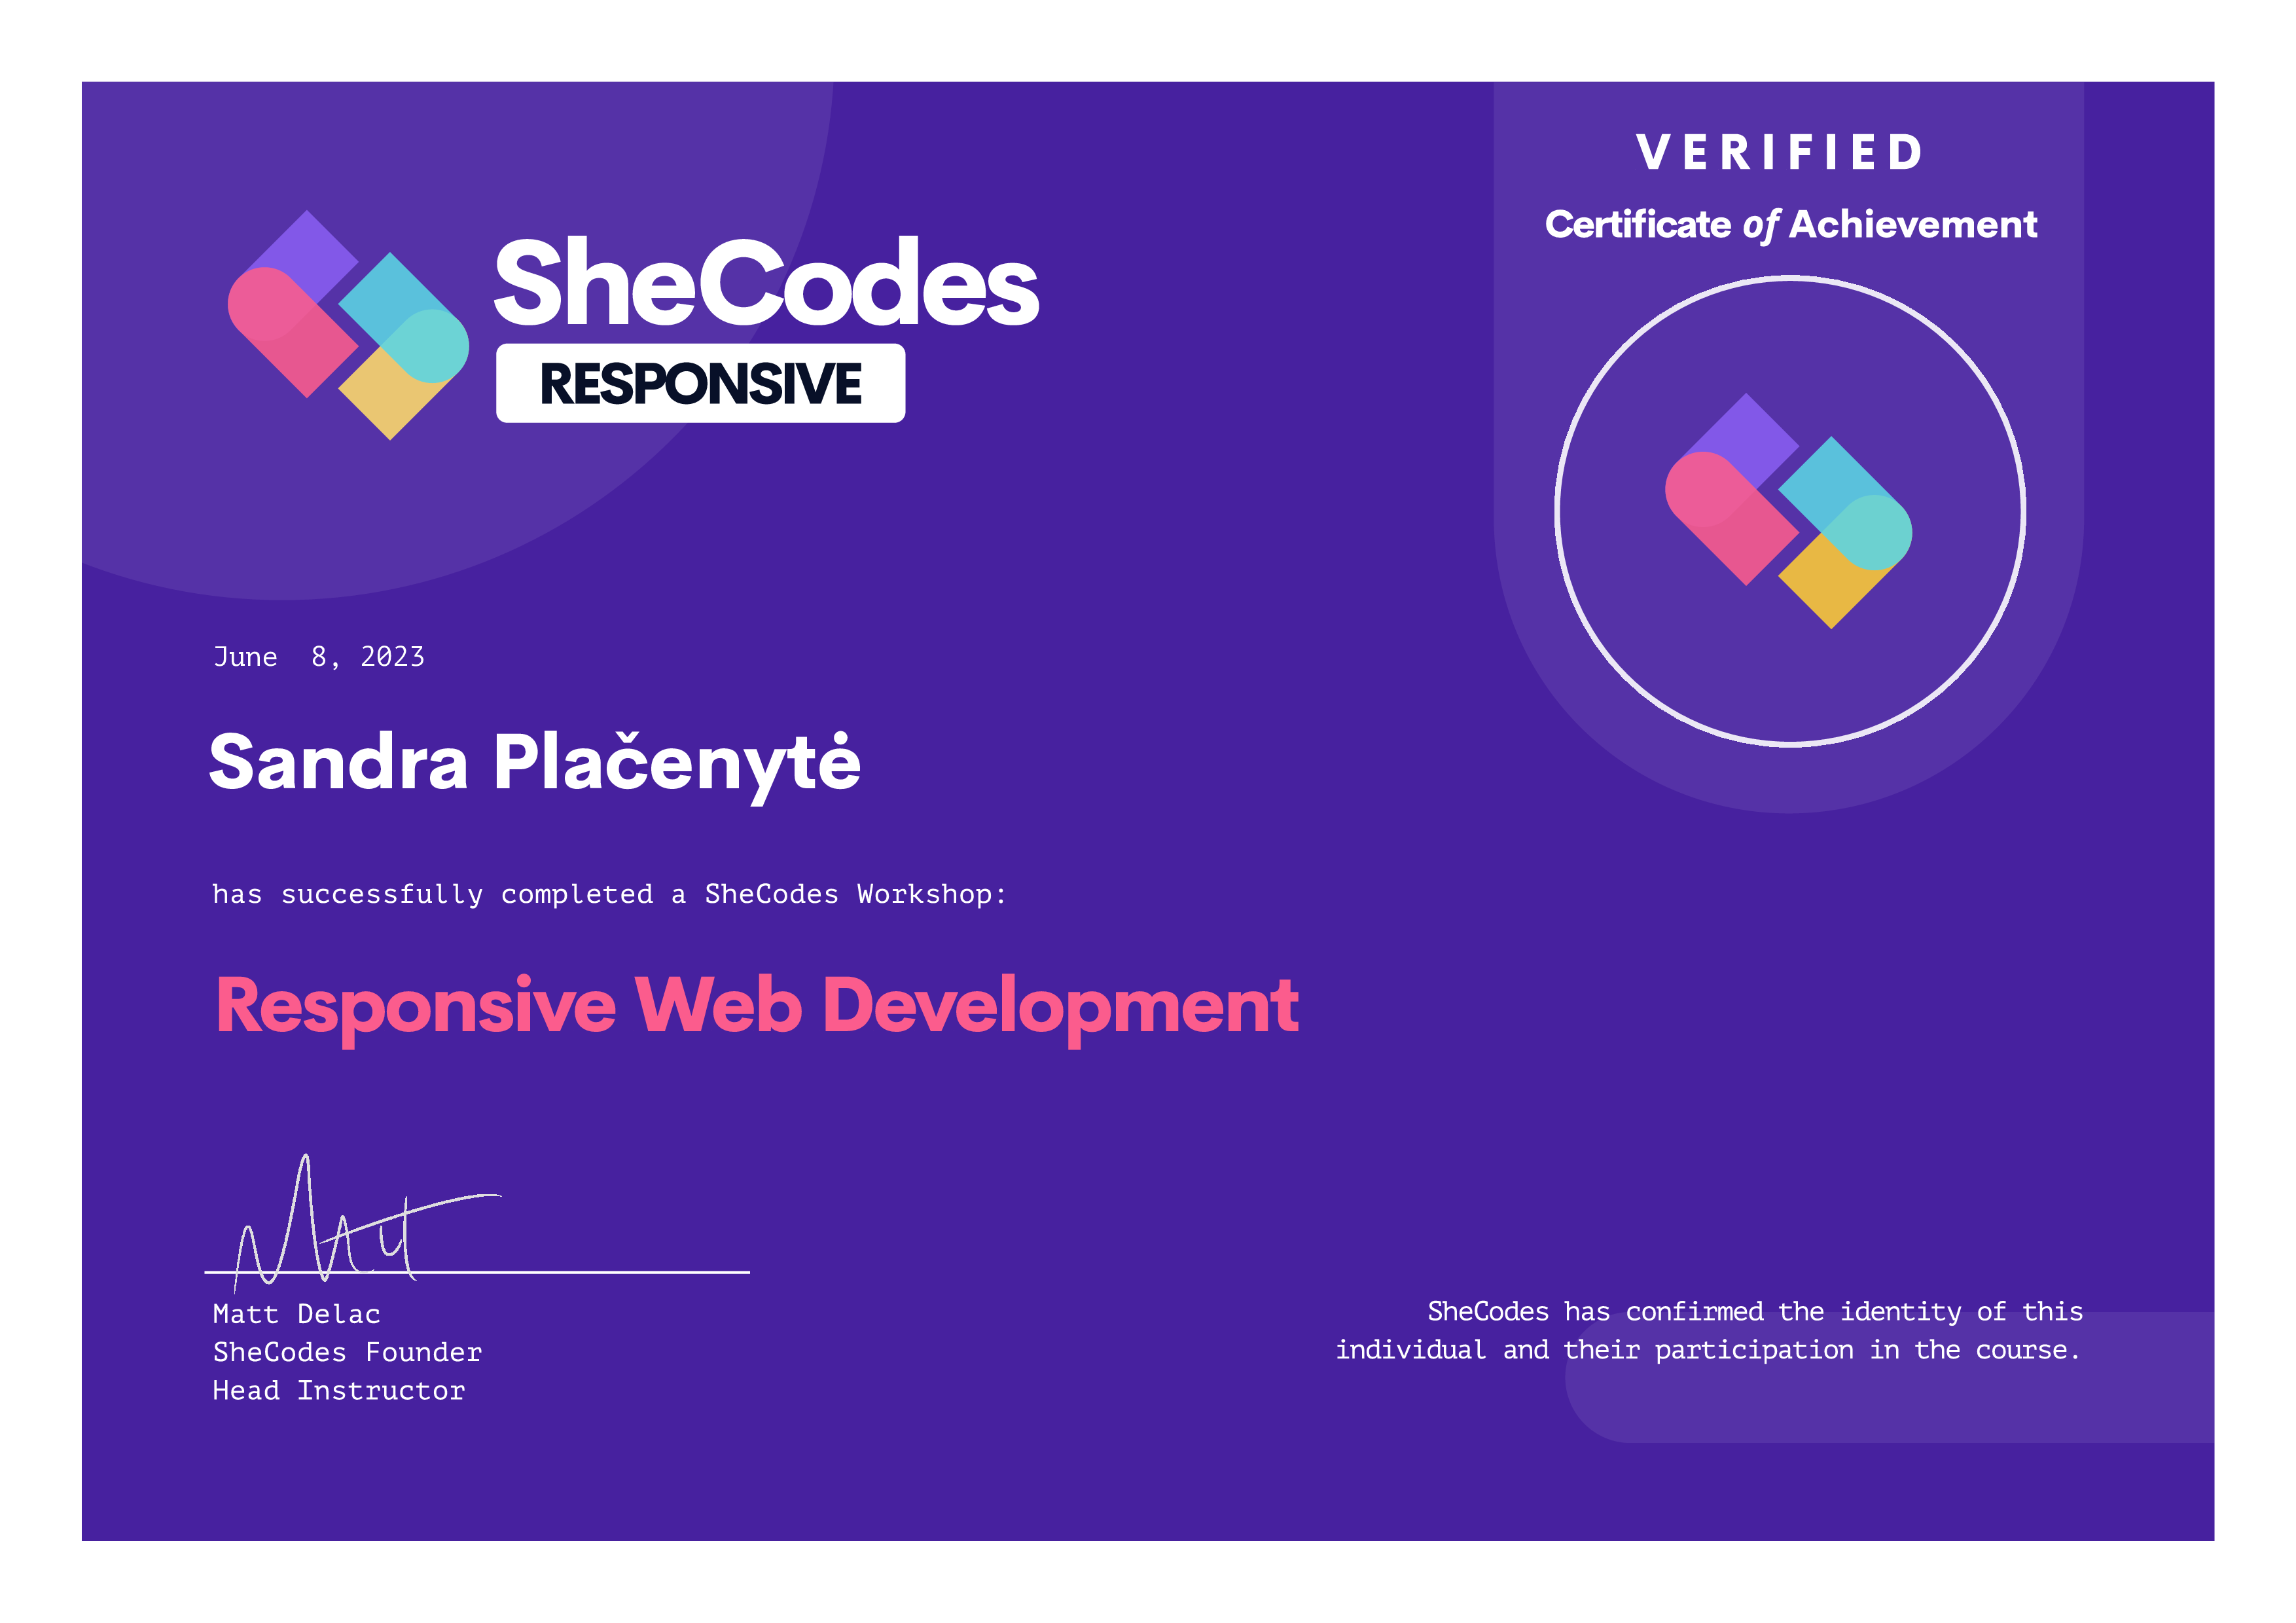 Sandra's certification to responsive web development